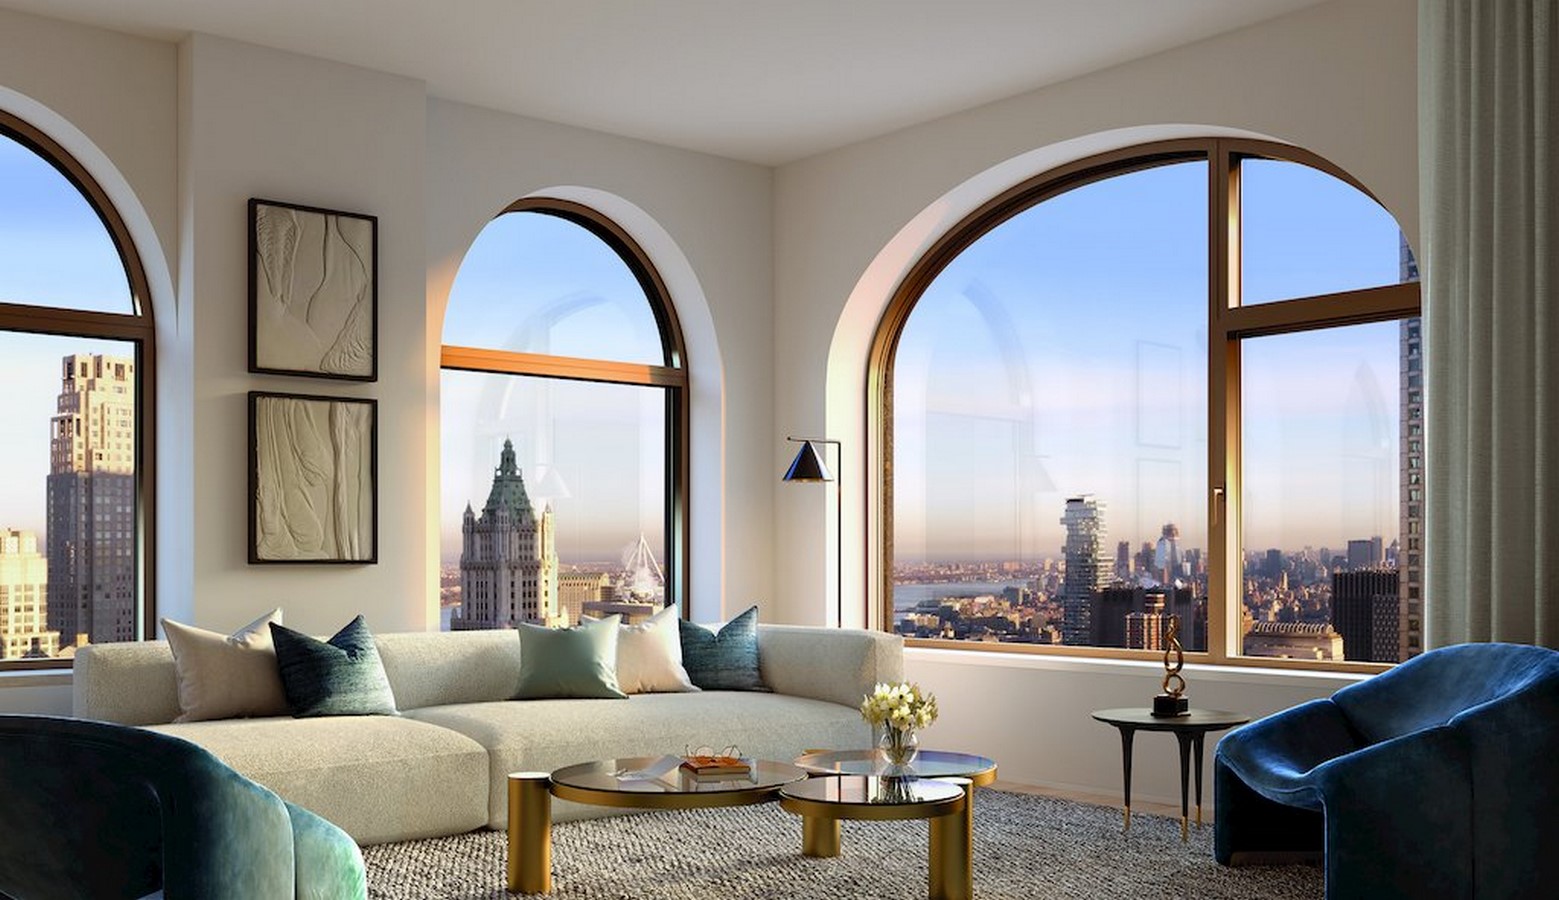 130 William by Sir David Adjaye: An elegant luxury condominium in Lower Manhattan - Sheet11